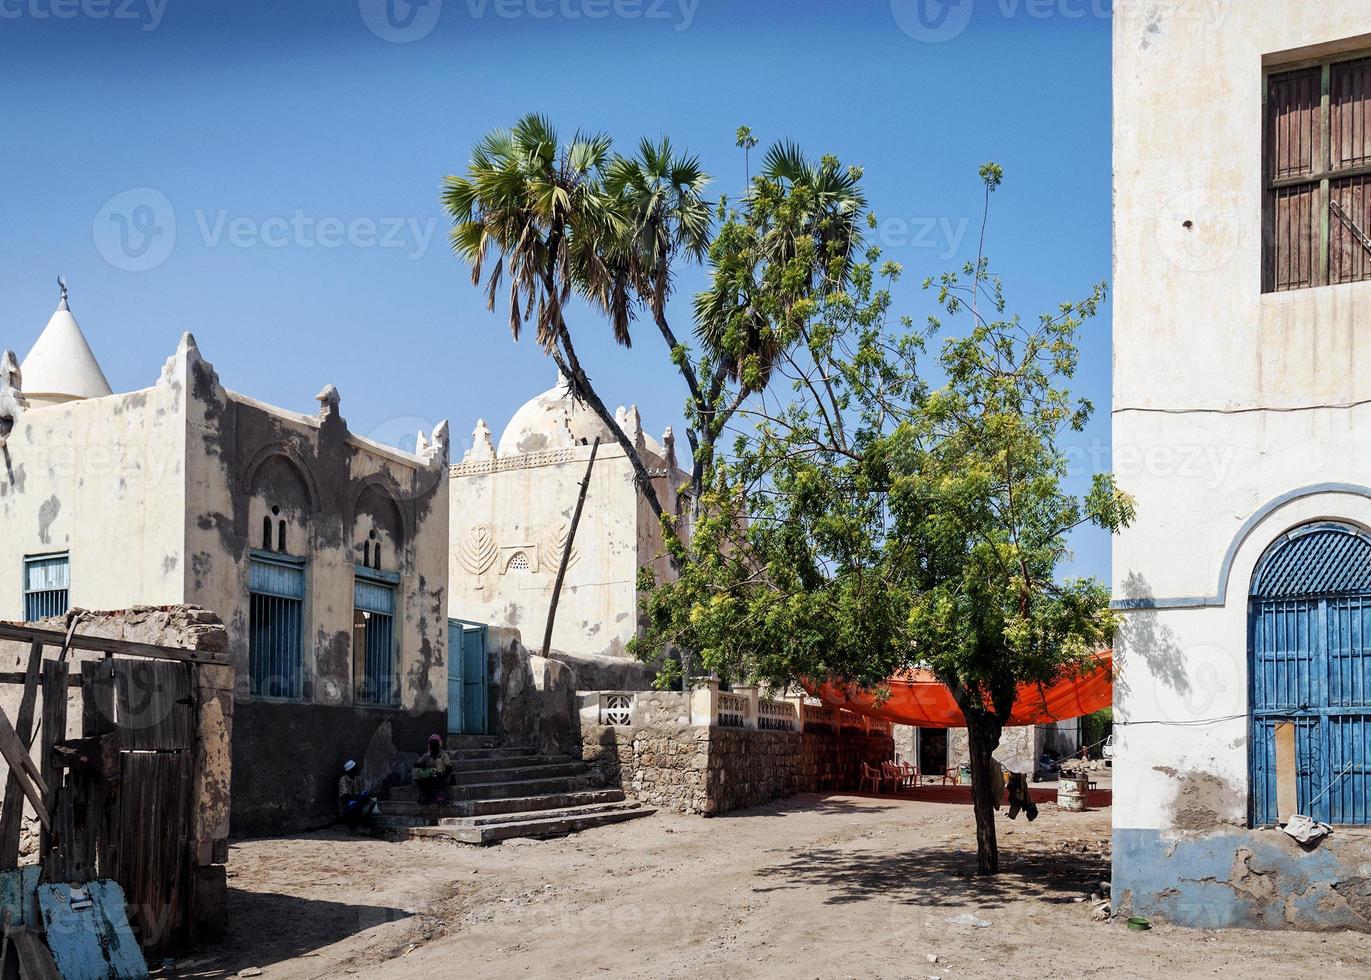 lokal arkitektur gata i röda havet stil i centrala Massawa gamla stan eritrea foto